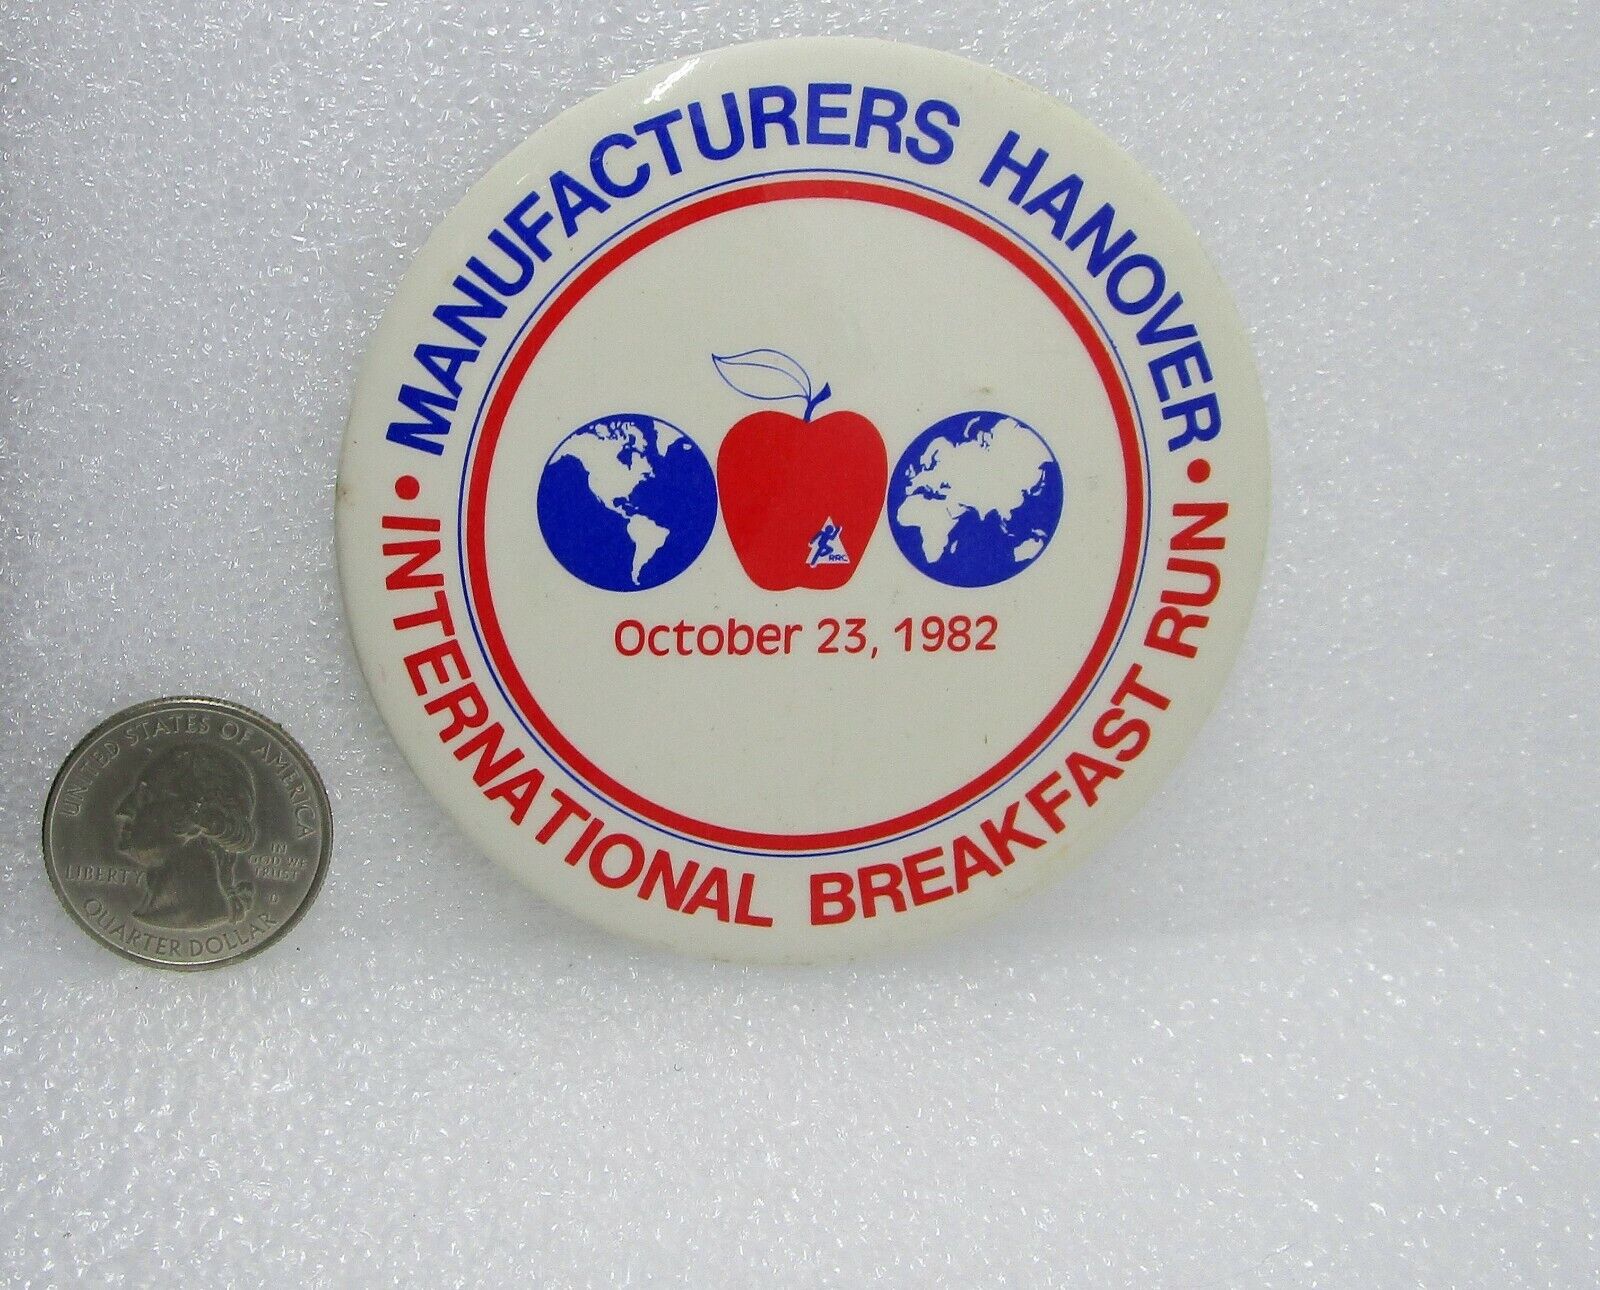 1982 Manufacturers Hanover International Breakfast Run Button Pin